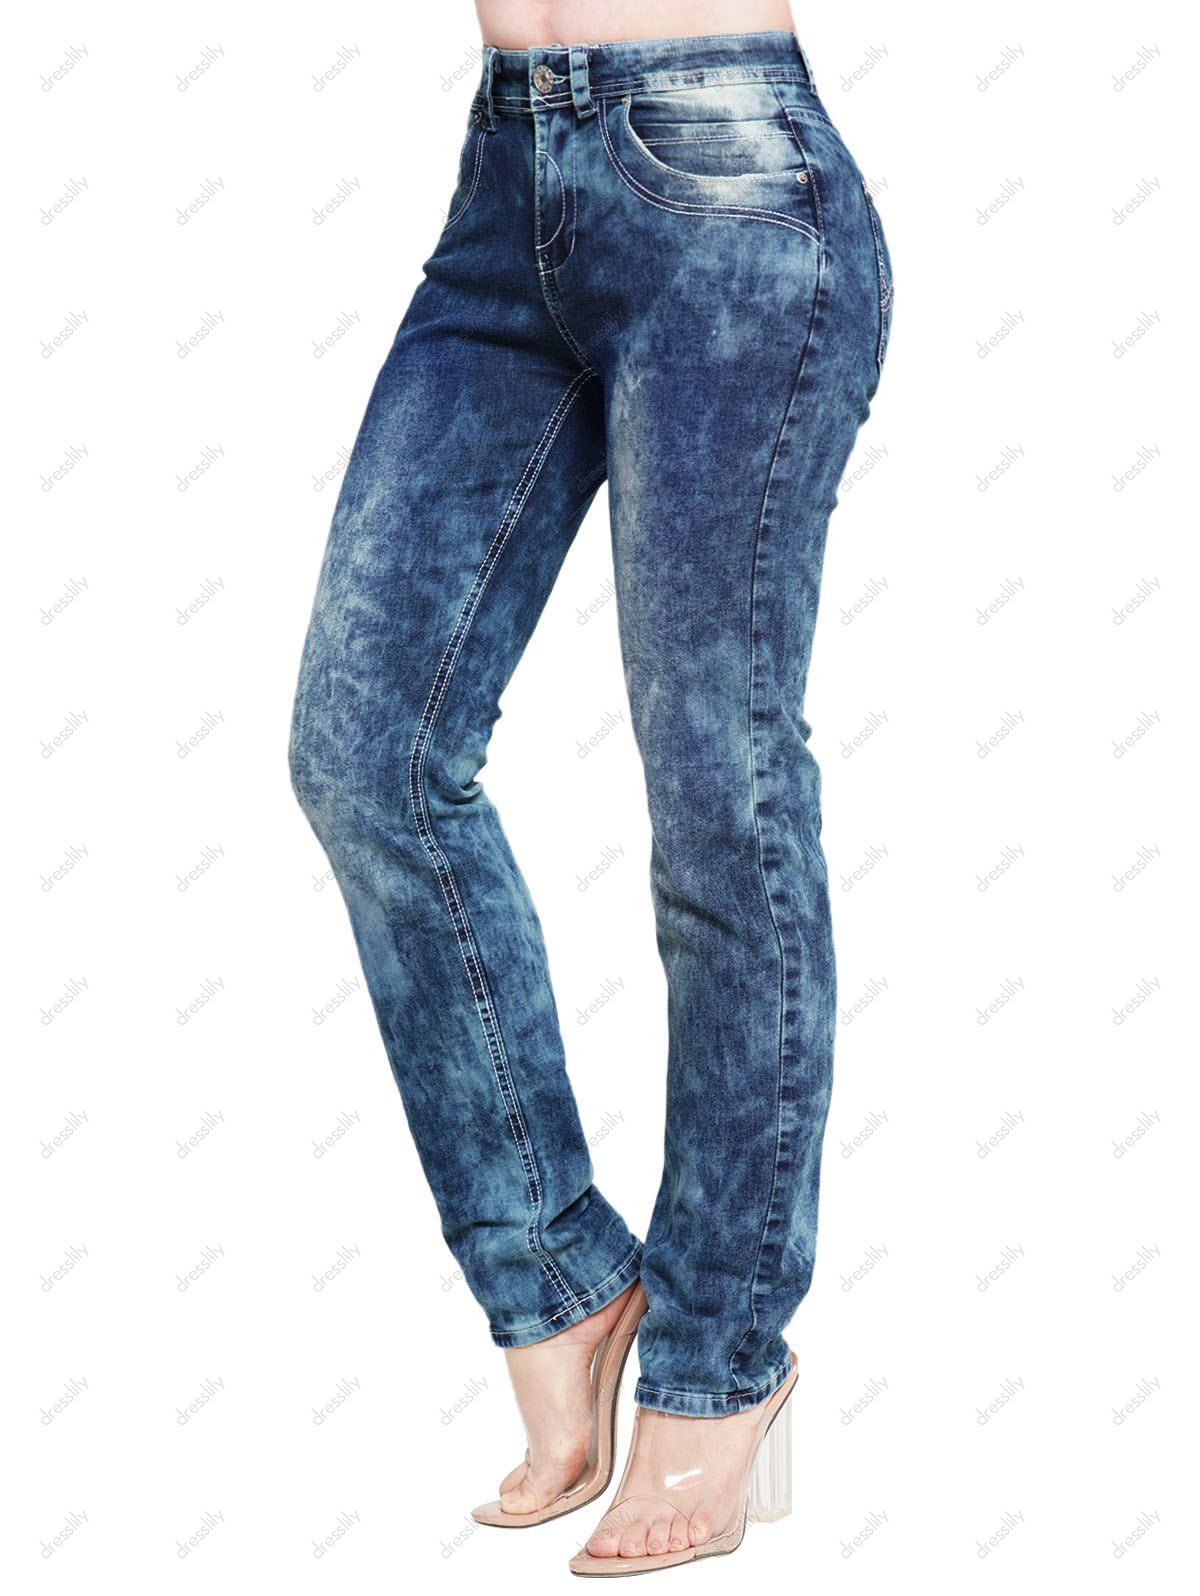 Acid Wash Jeans Zipper Fly Pockets High Waisted Straight Long Denim Pants - BLUE 2XL